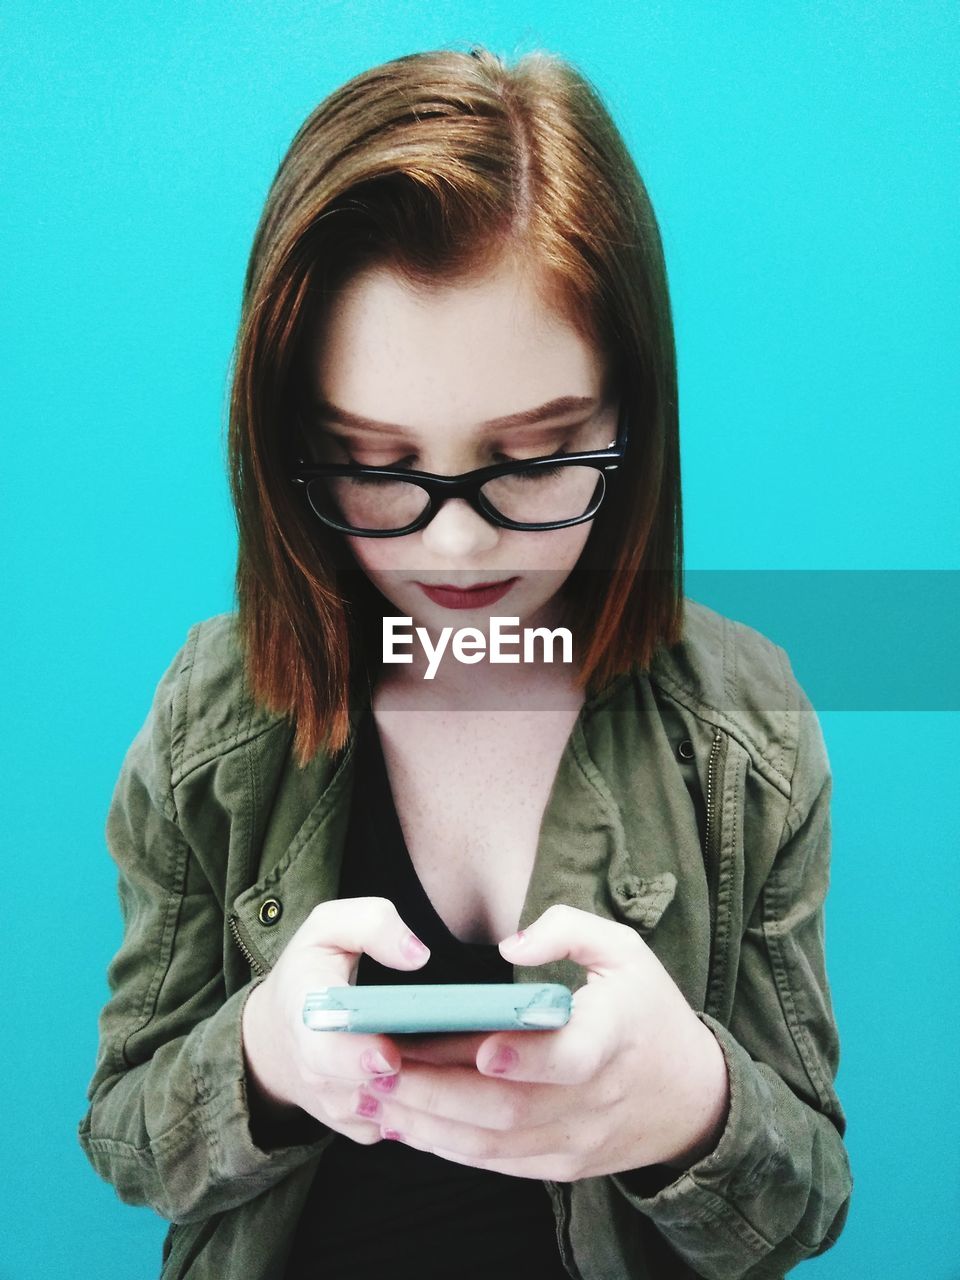 Teenage girl using mobile phone against blue background